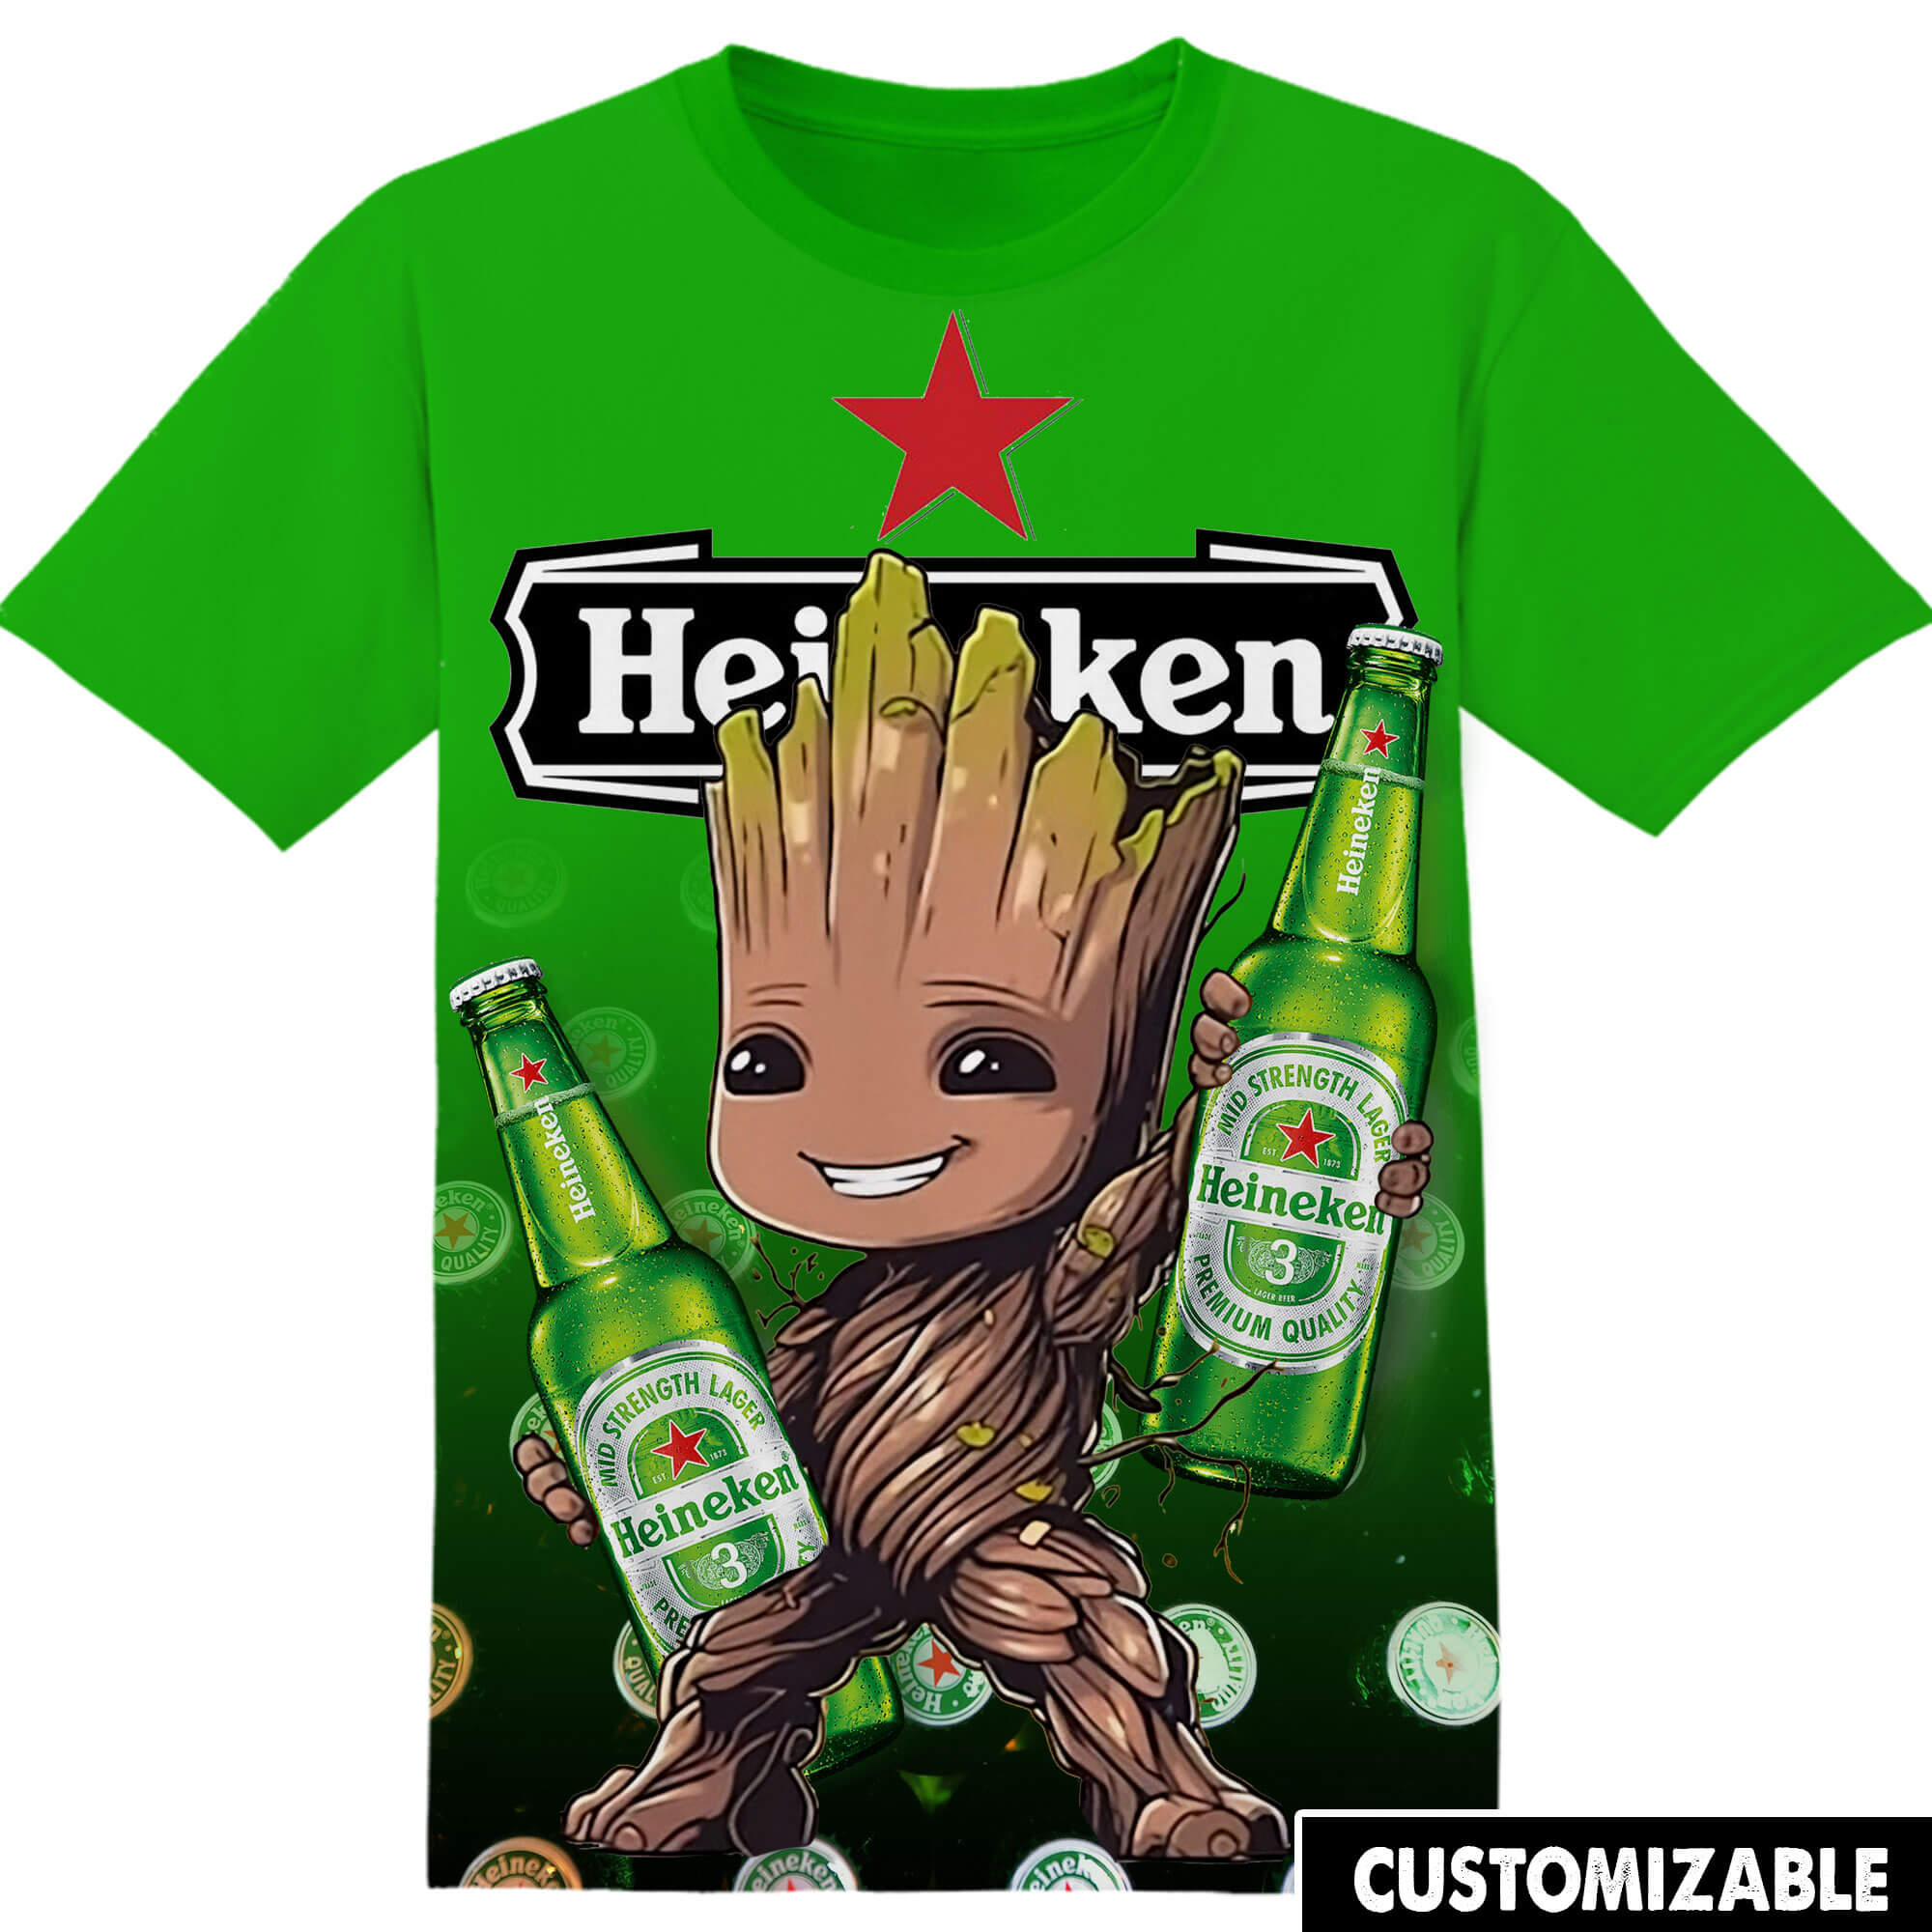 Customized Heineken Marvel Groot Shirt